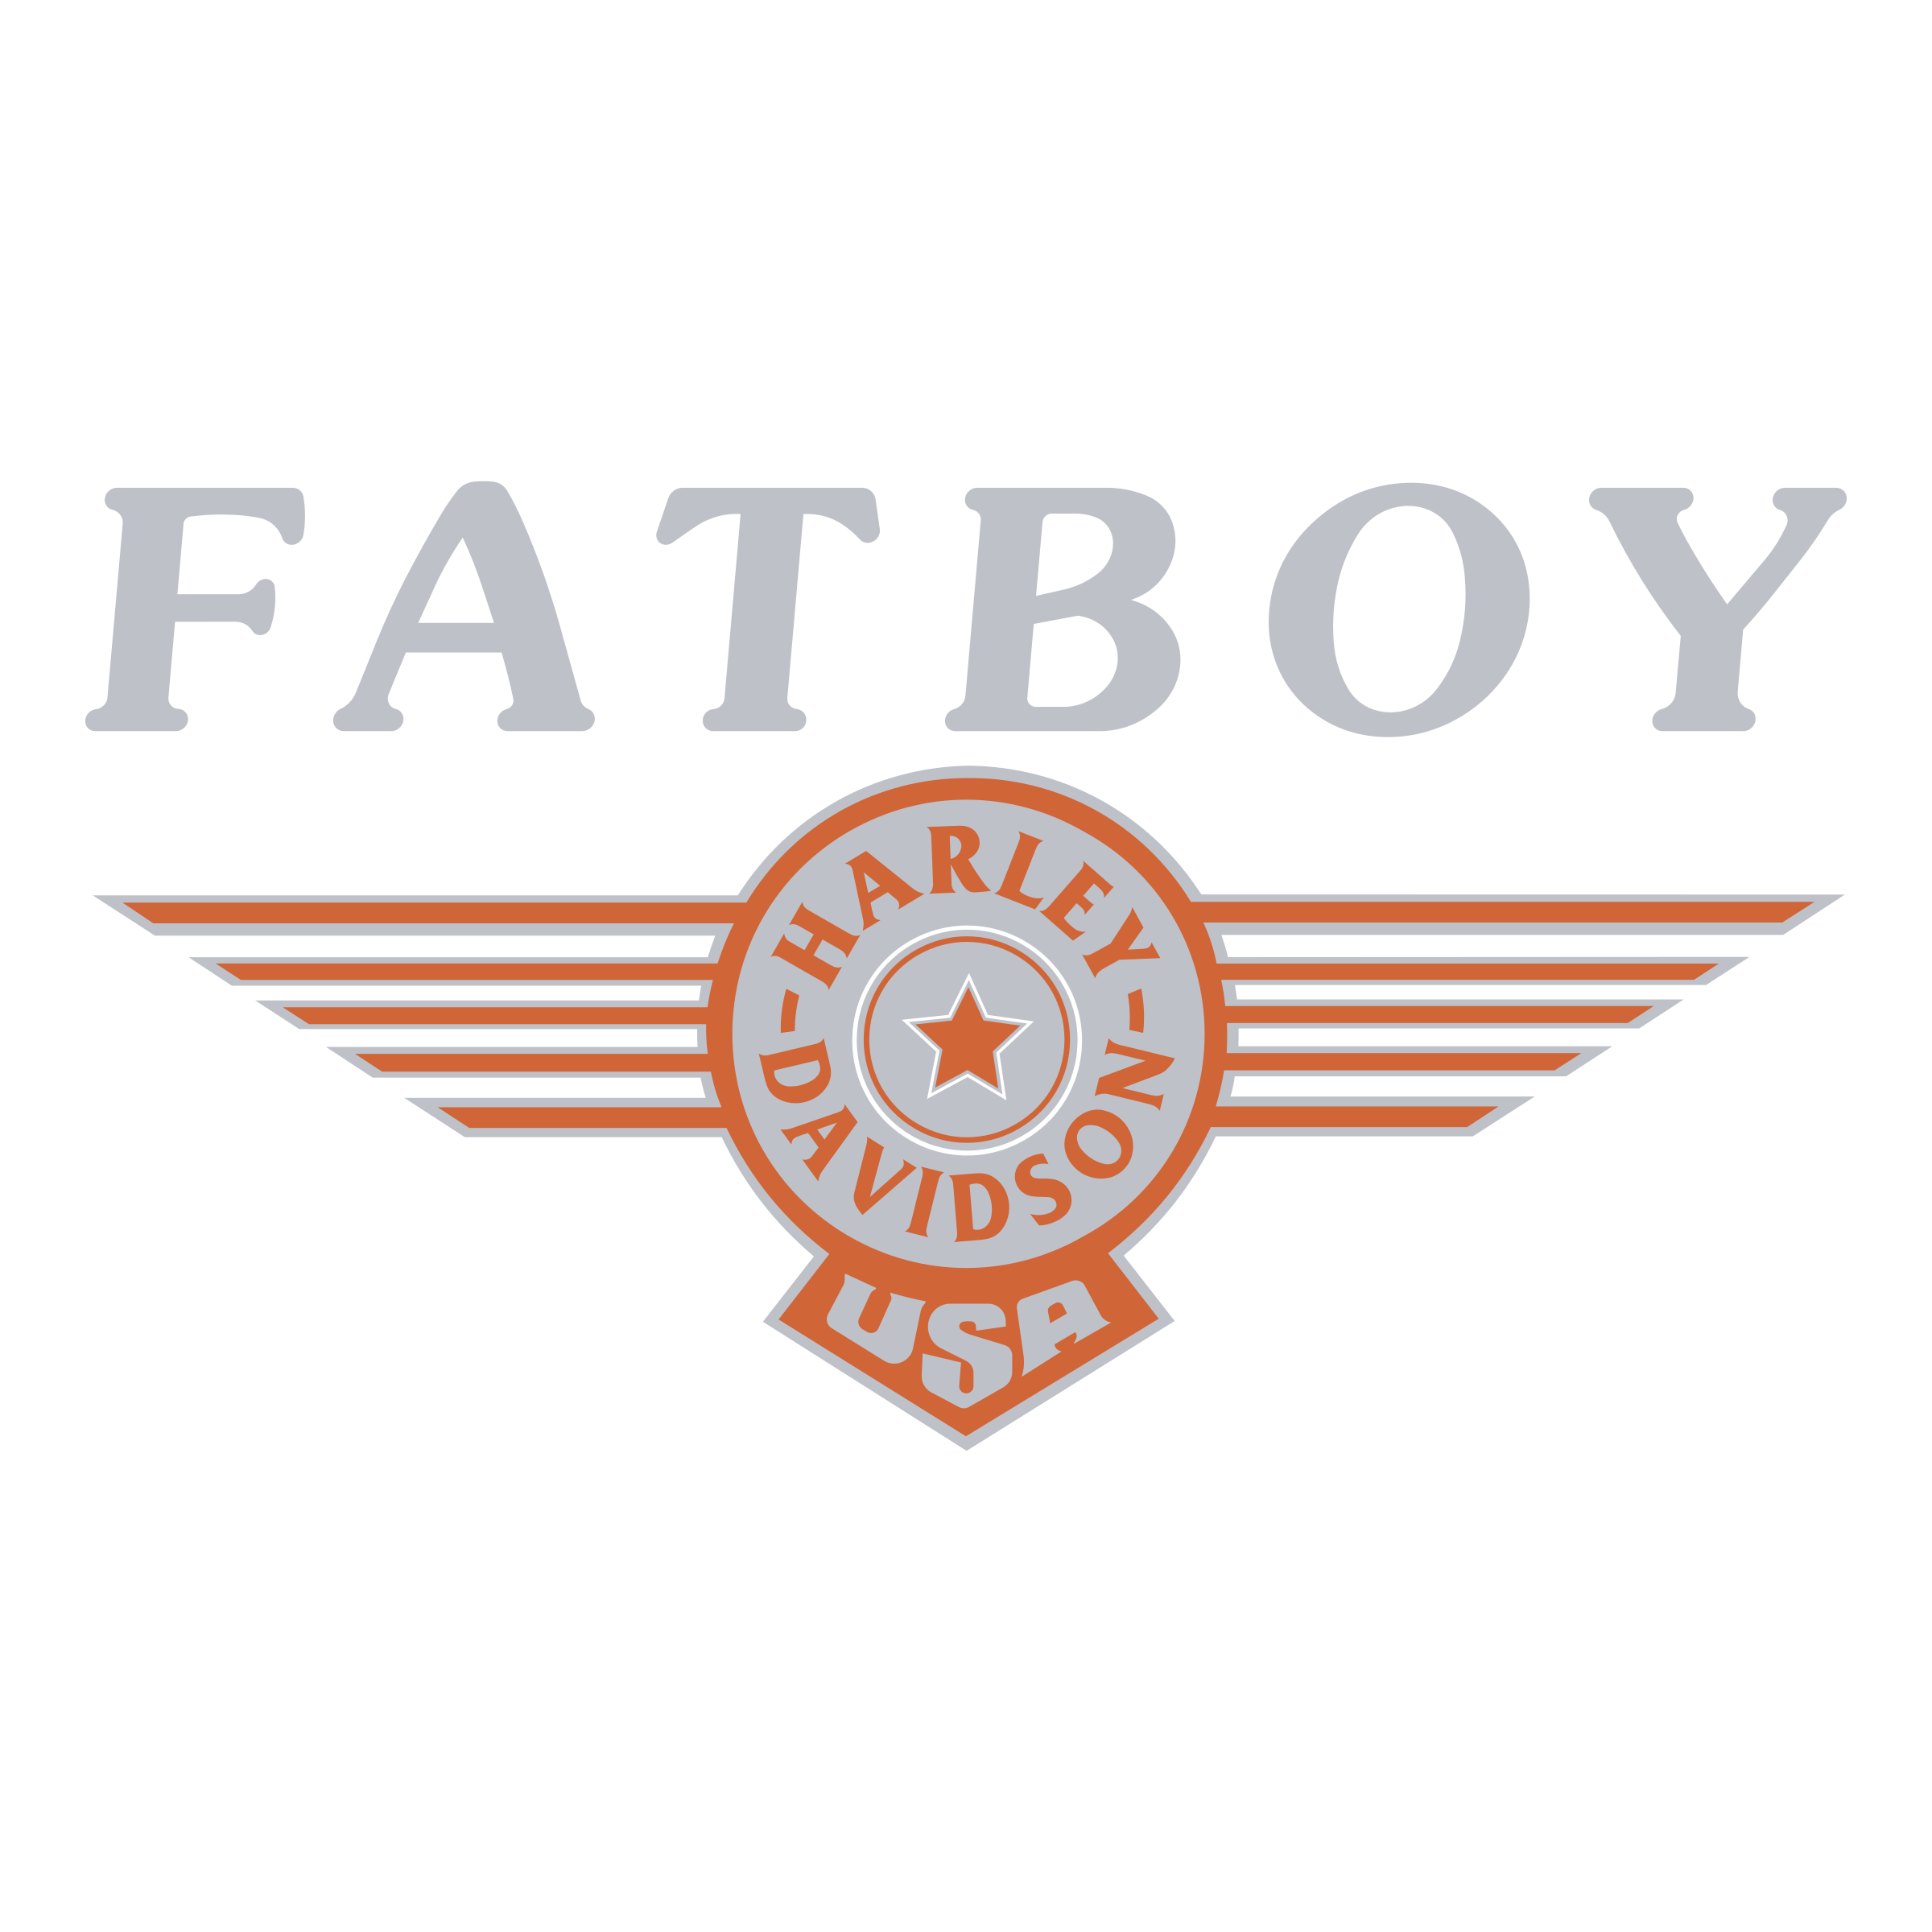 Fatboy Logo - Fatboy Logo PNG Transparent & SVG Vector - Freebie Supply